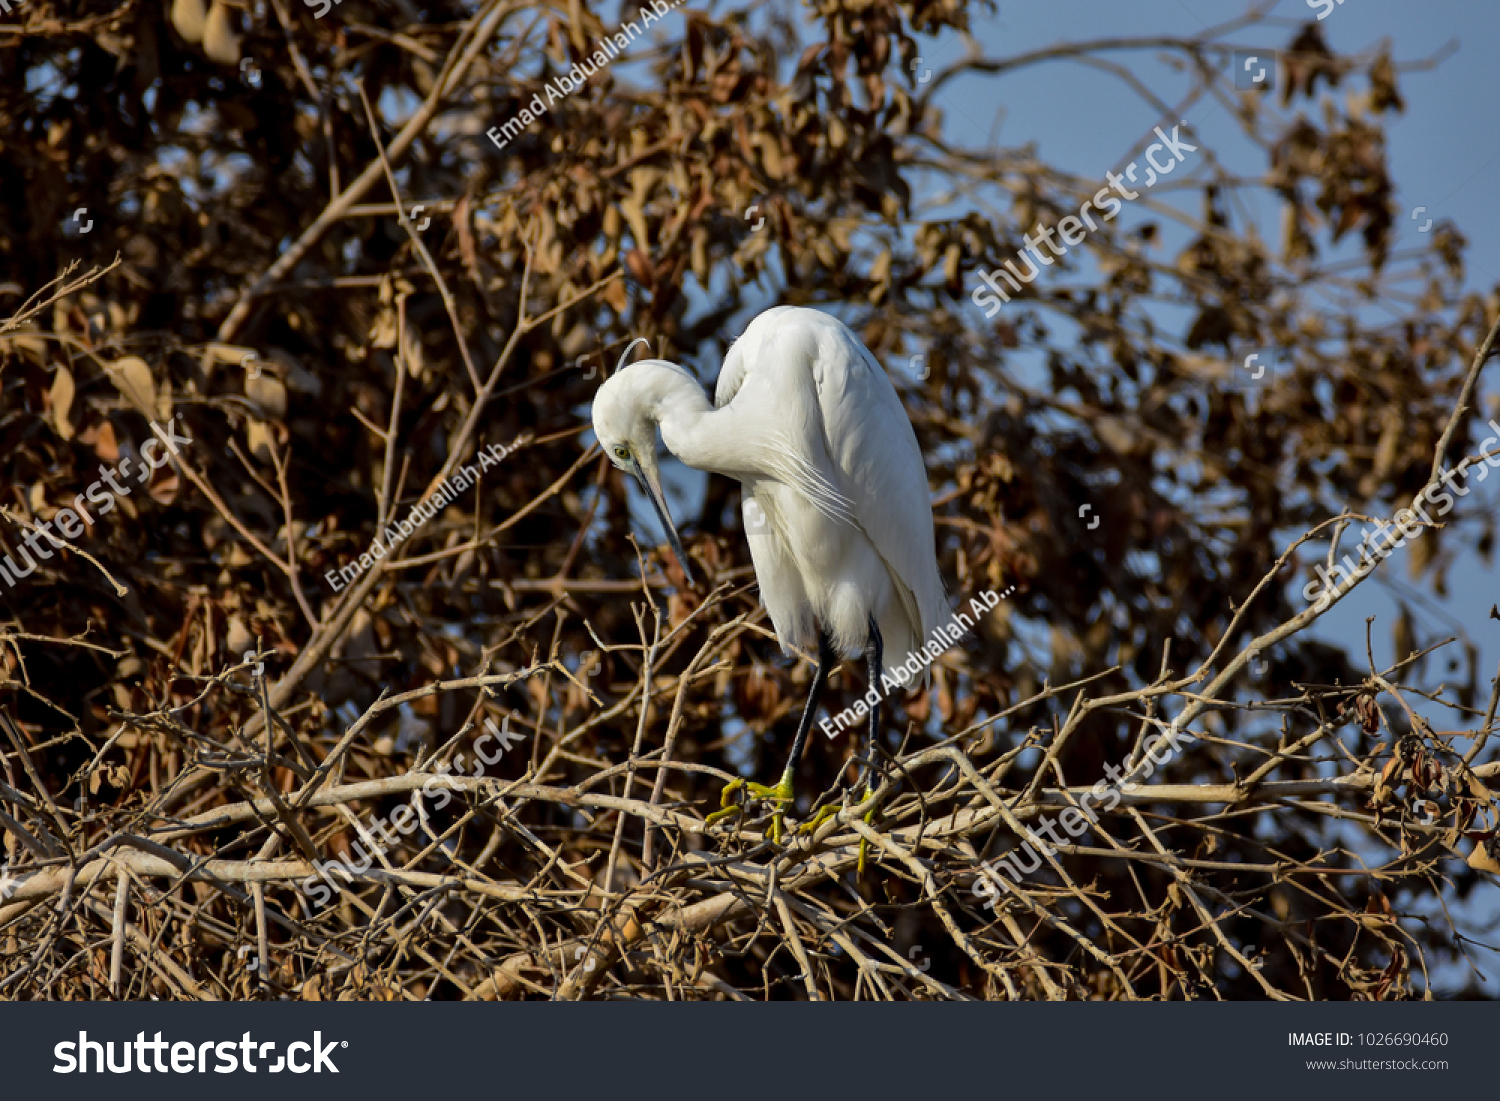 little Egret in sulaibikhat bay - kuwait #1026690460